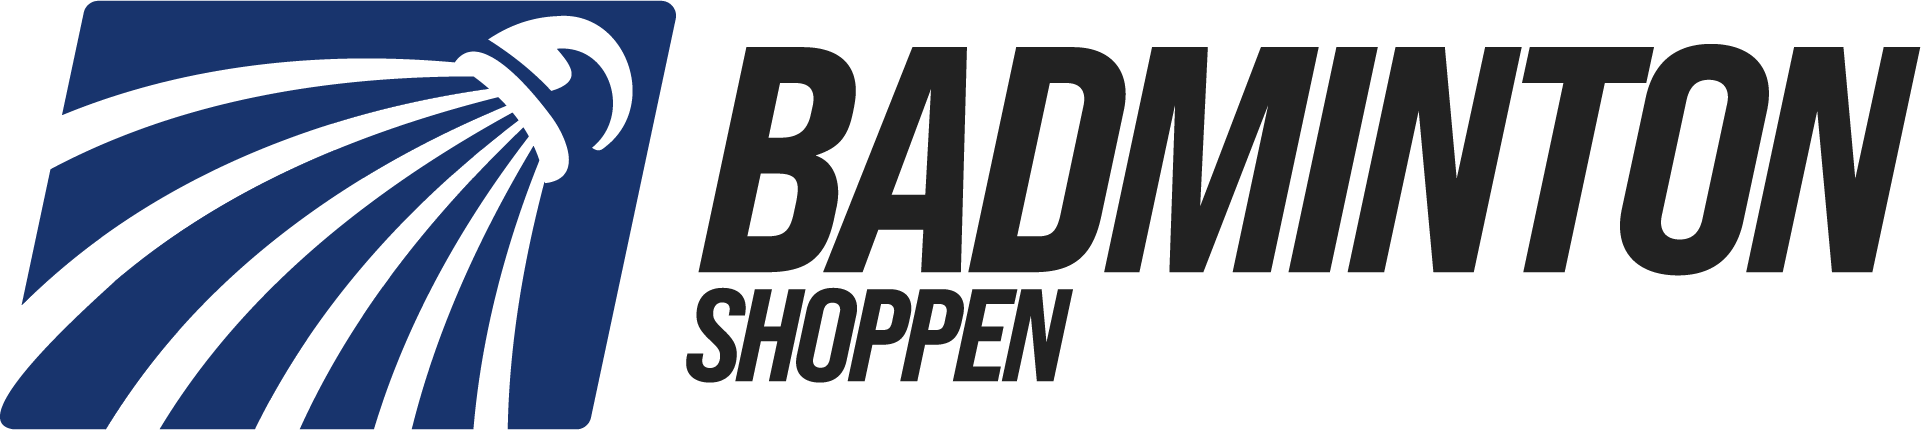 Badmintonshoppen logo